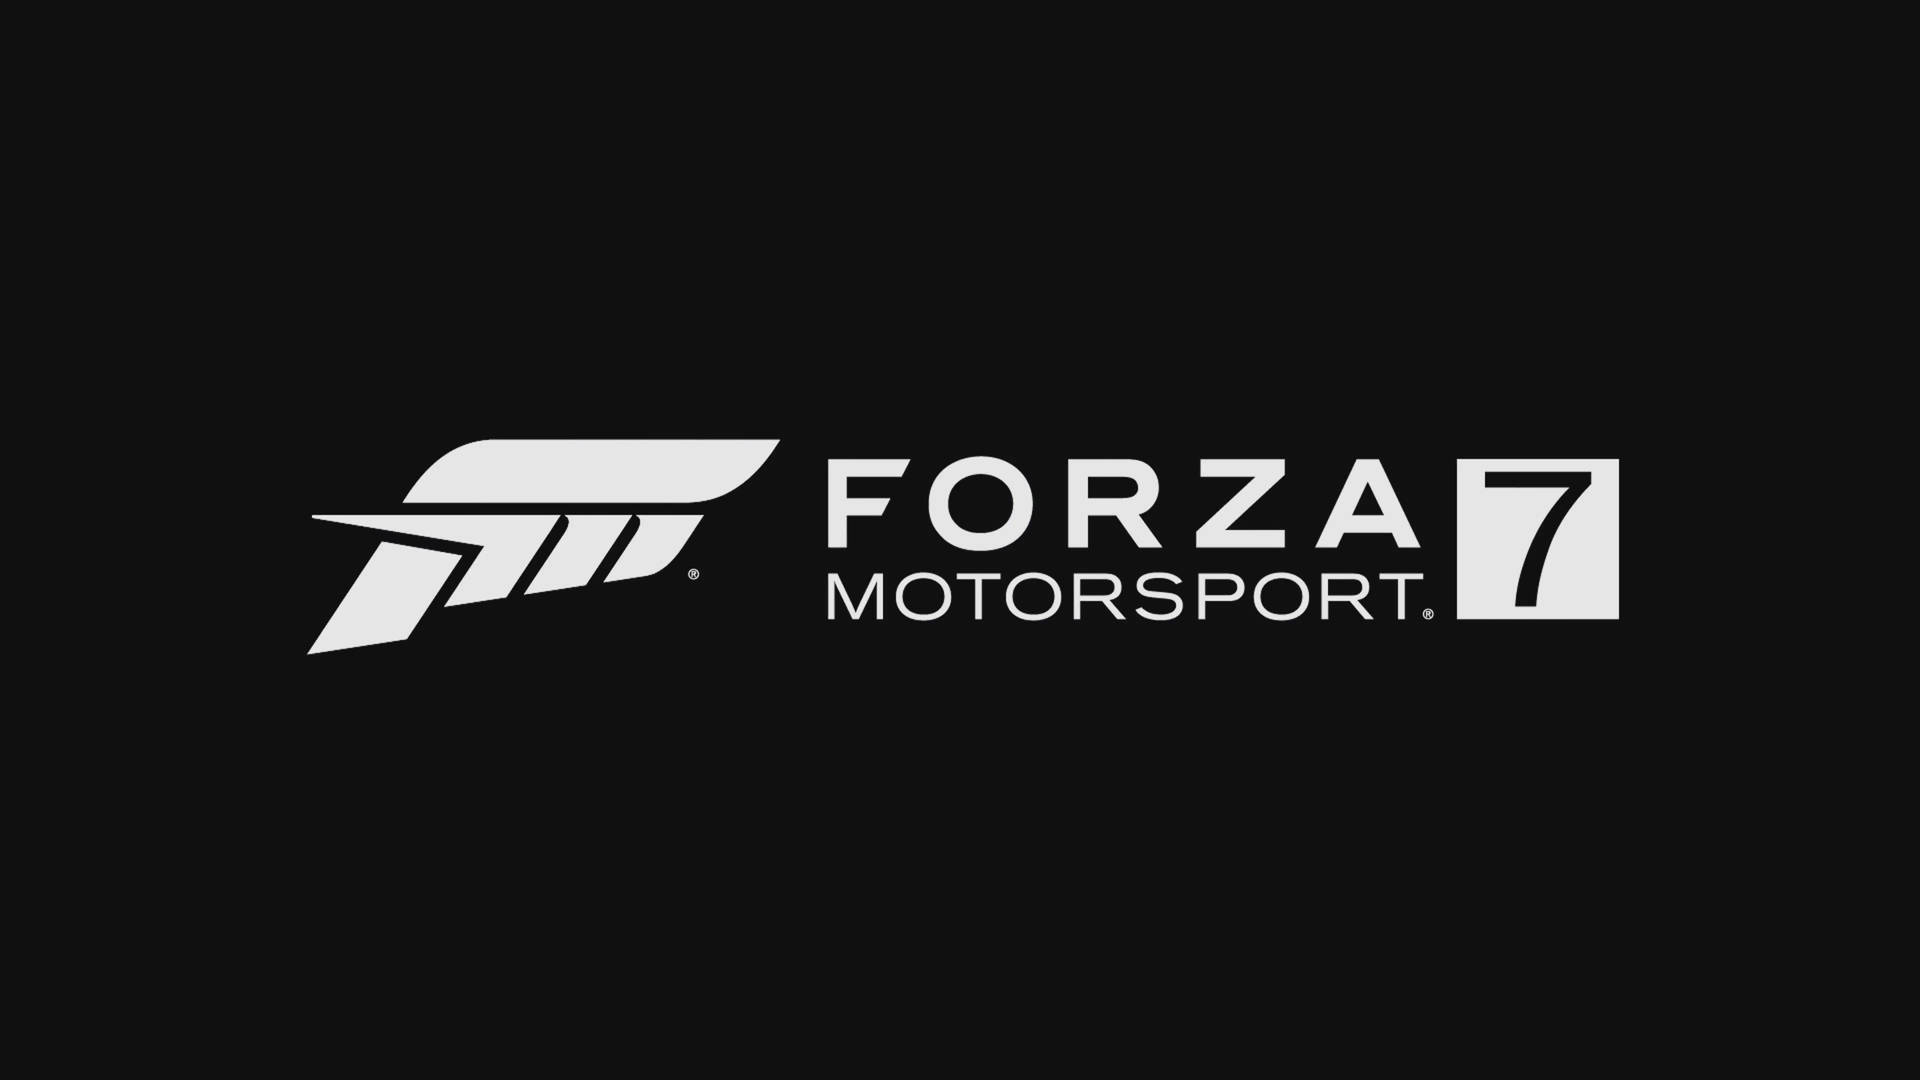 Forzamotorsport 7 Logotyp Wallpaper